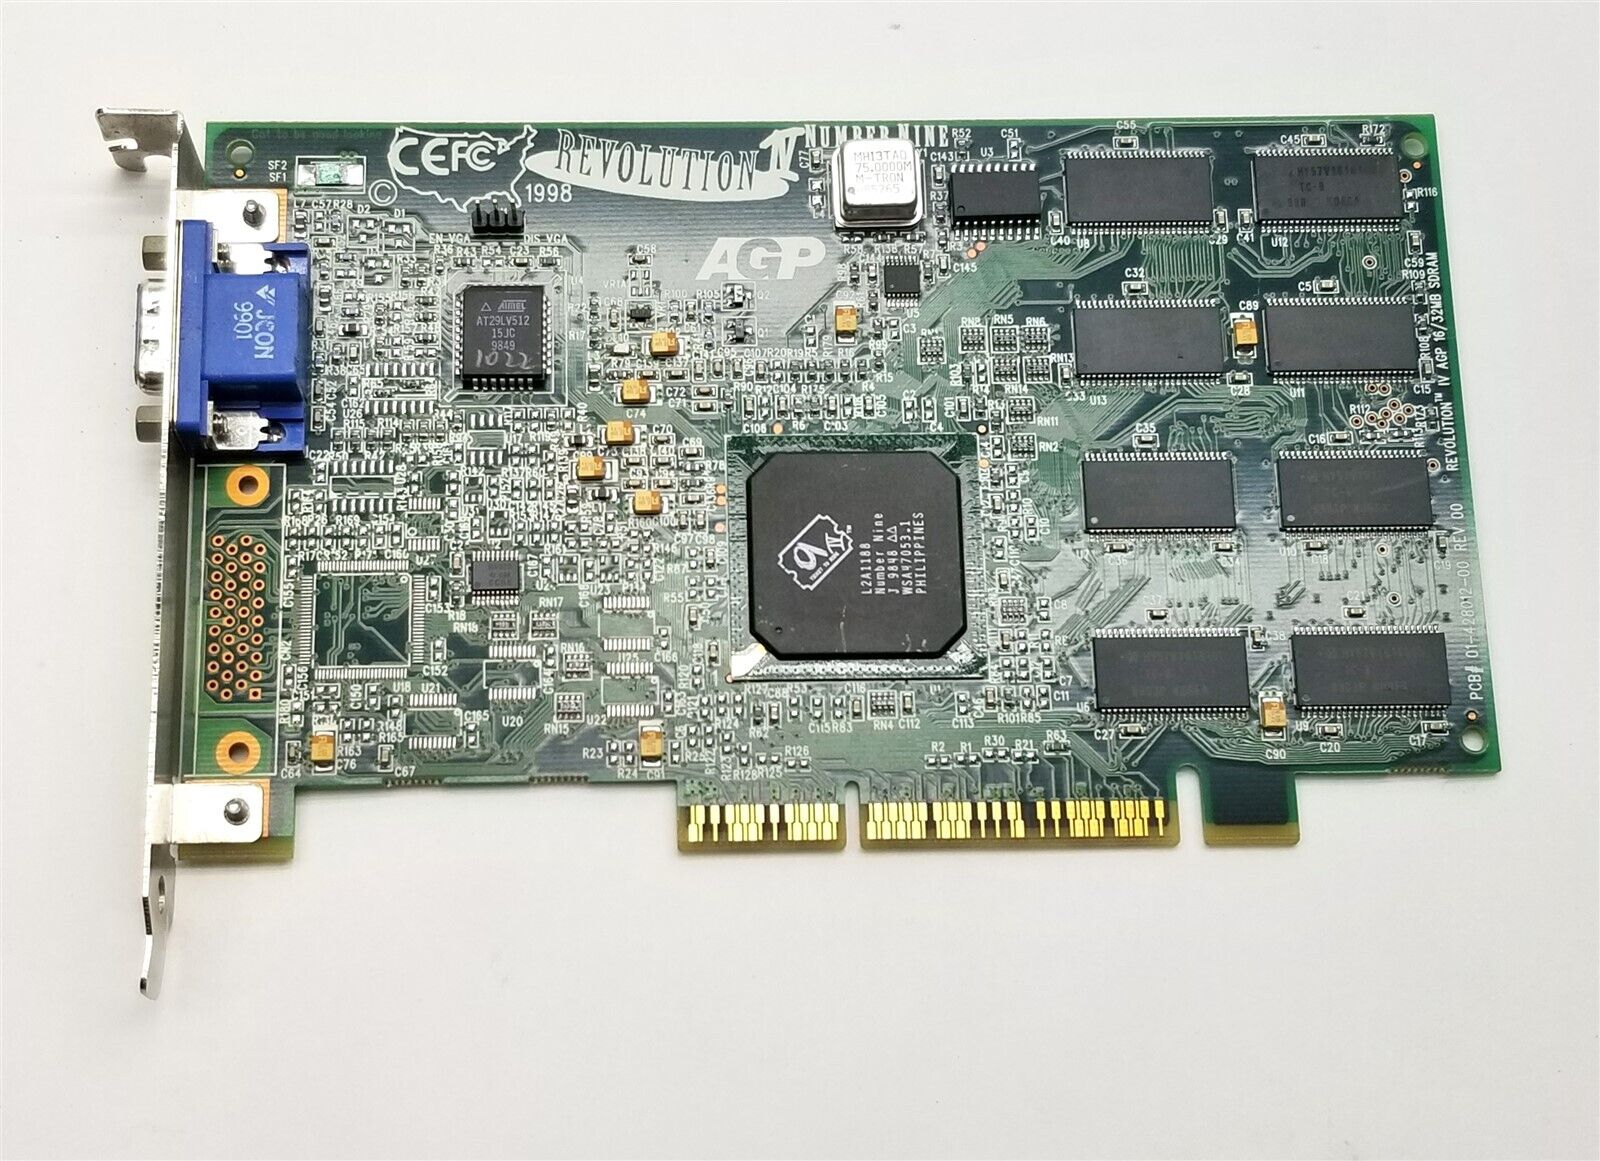 Number Nine Revolution IV 32MB SDRAM AGP VGA Graphics Card 01-428012-00 REV 00